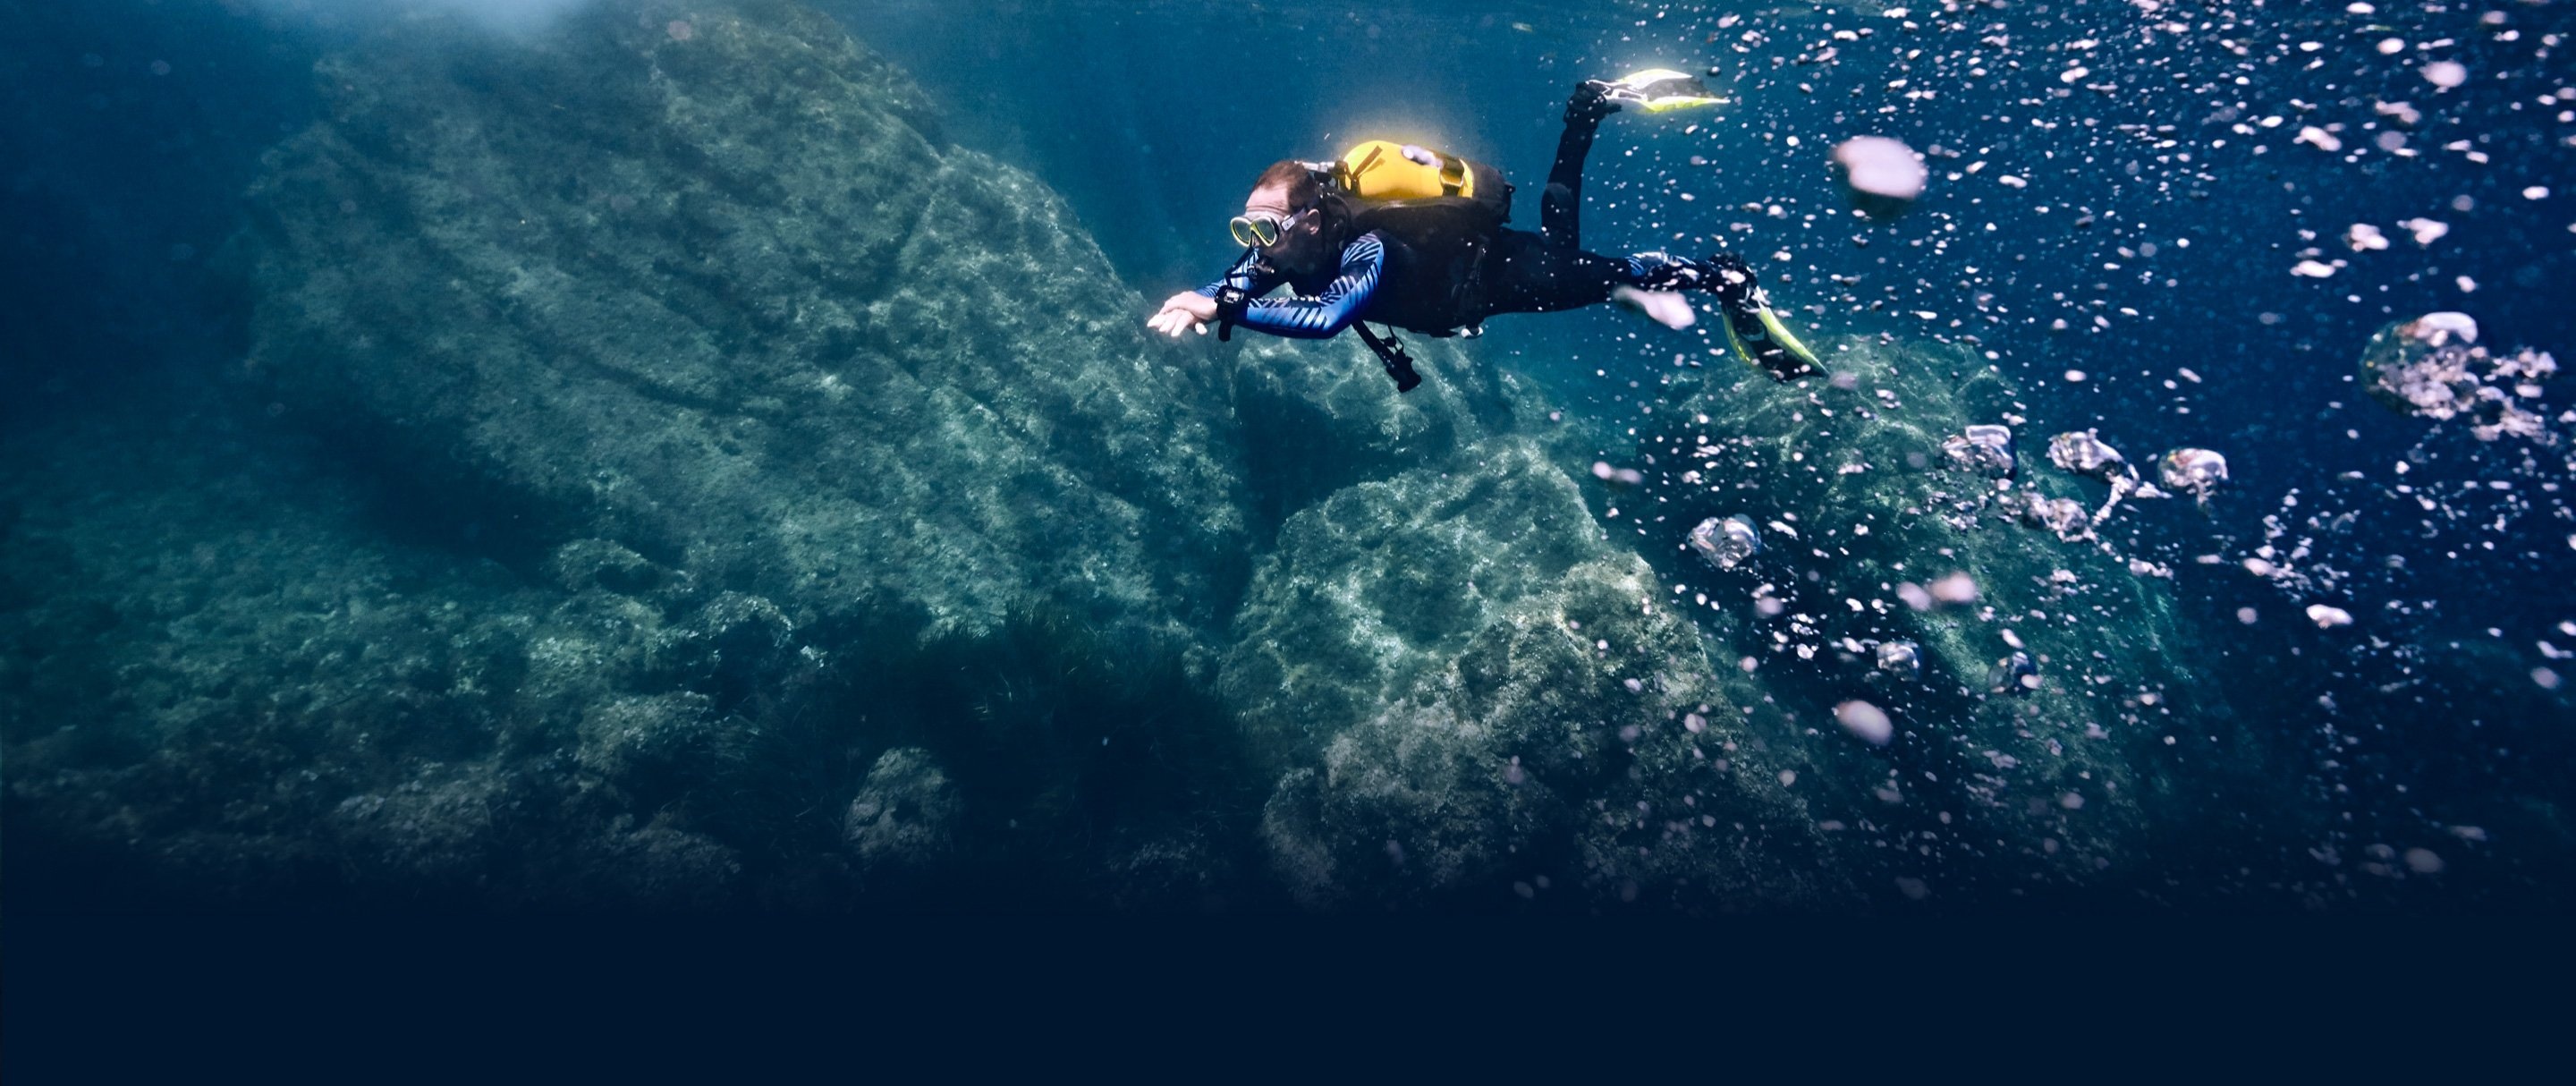 Scuba Diving: A professional diver explores the bottom of a flooded cave. 2880x1220 Dual Screen Wallpaper.